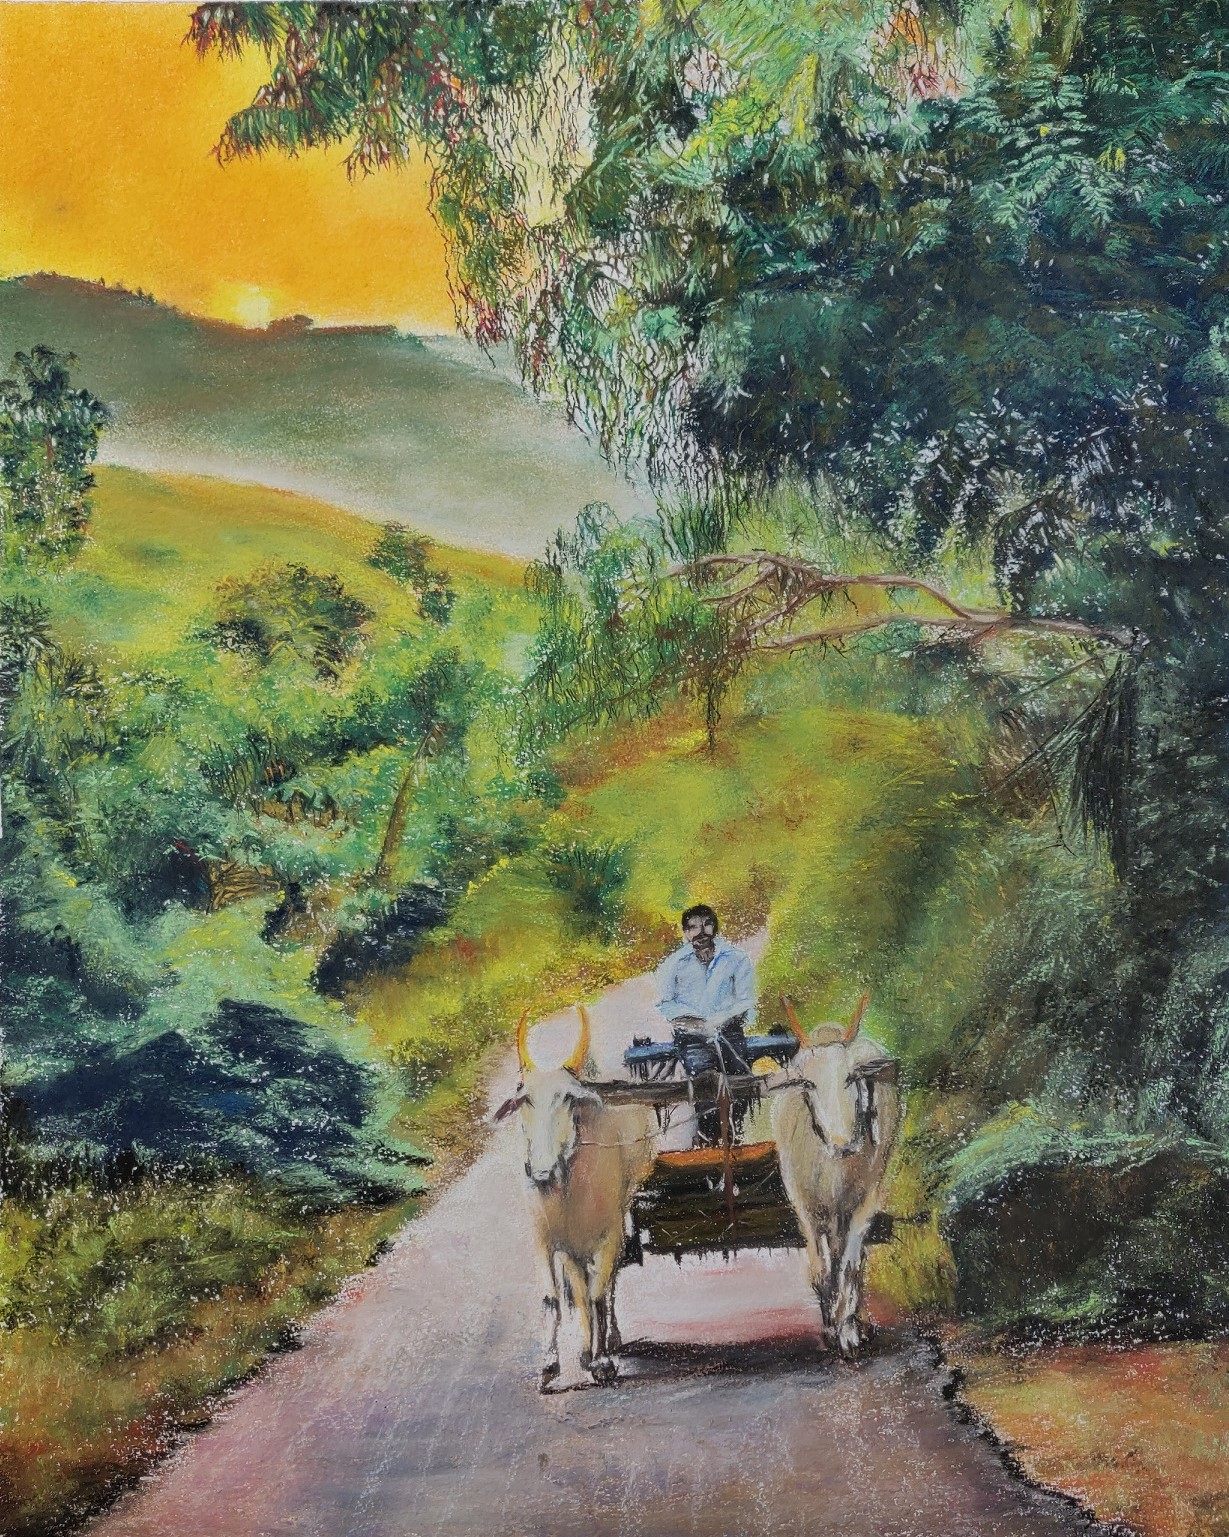 Rural India - A Glimpse 